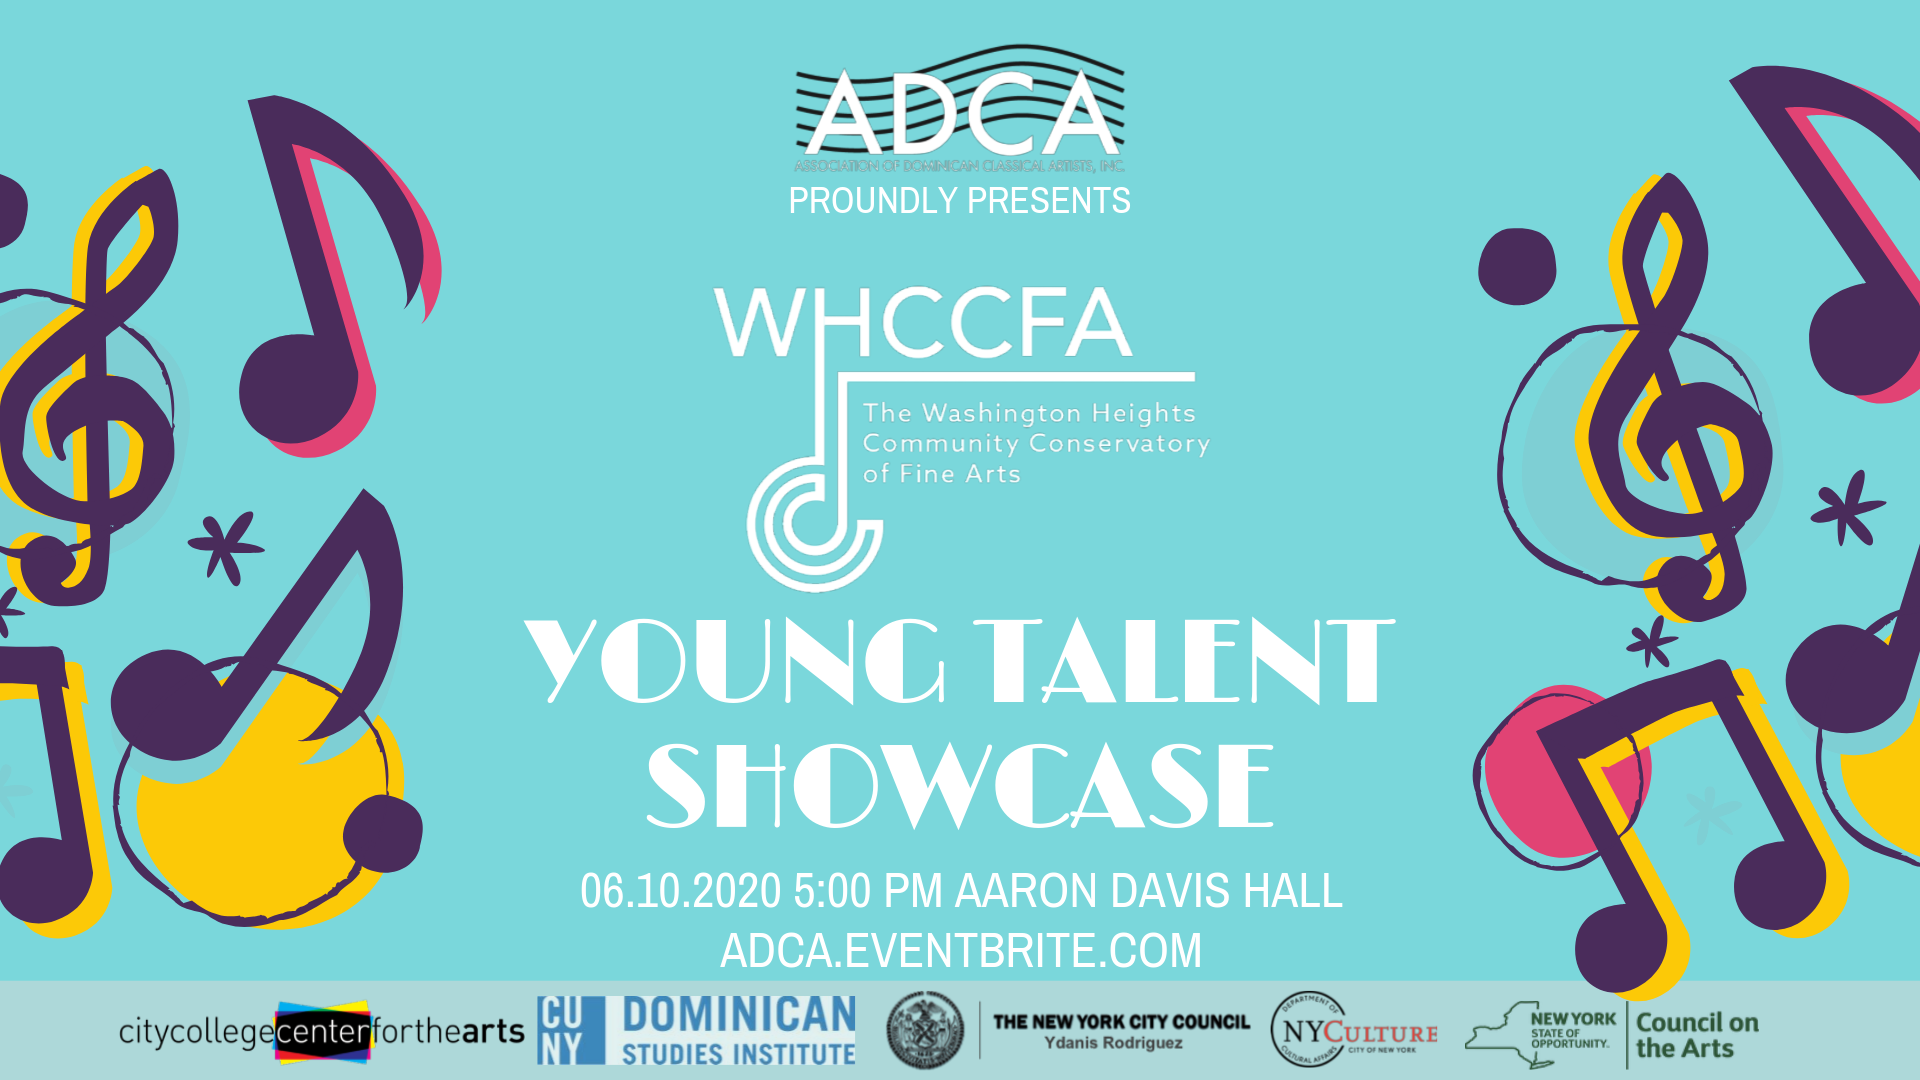 “Young Talent Showcase of WHCCFA”